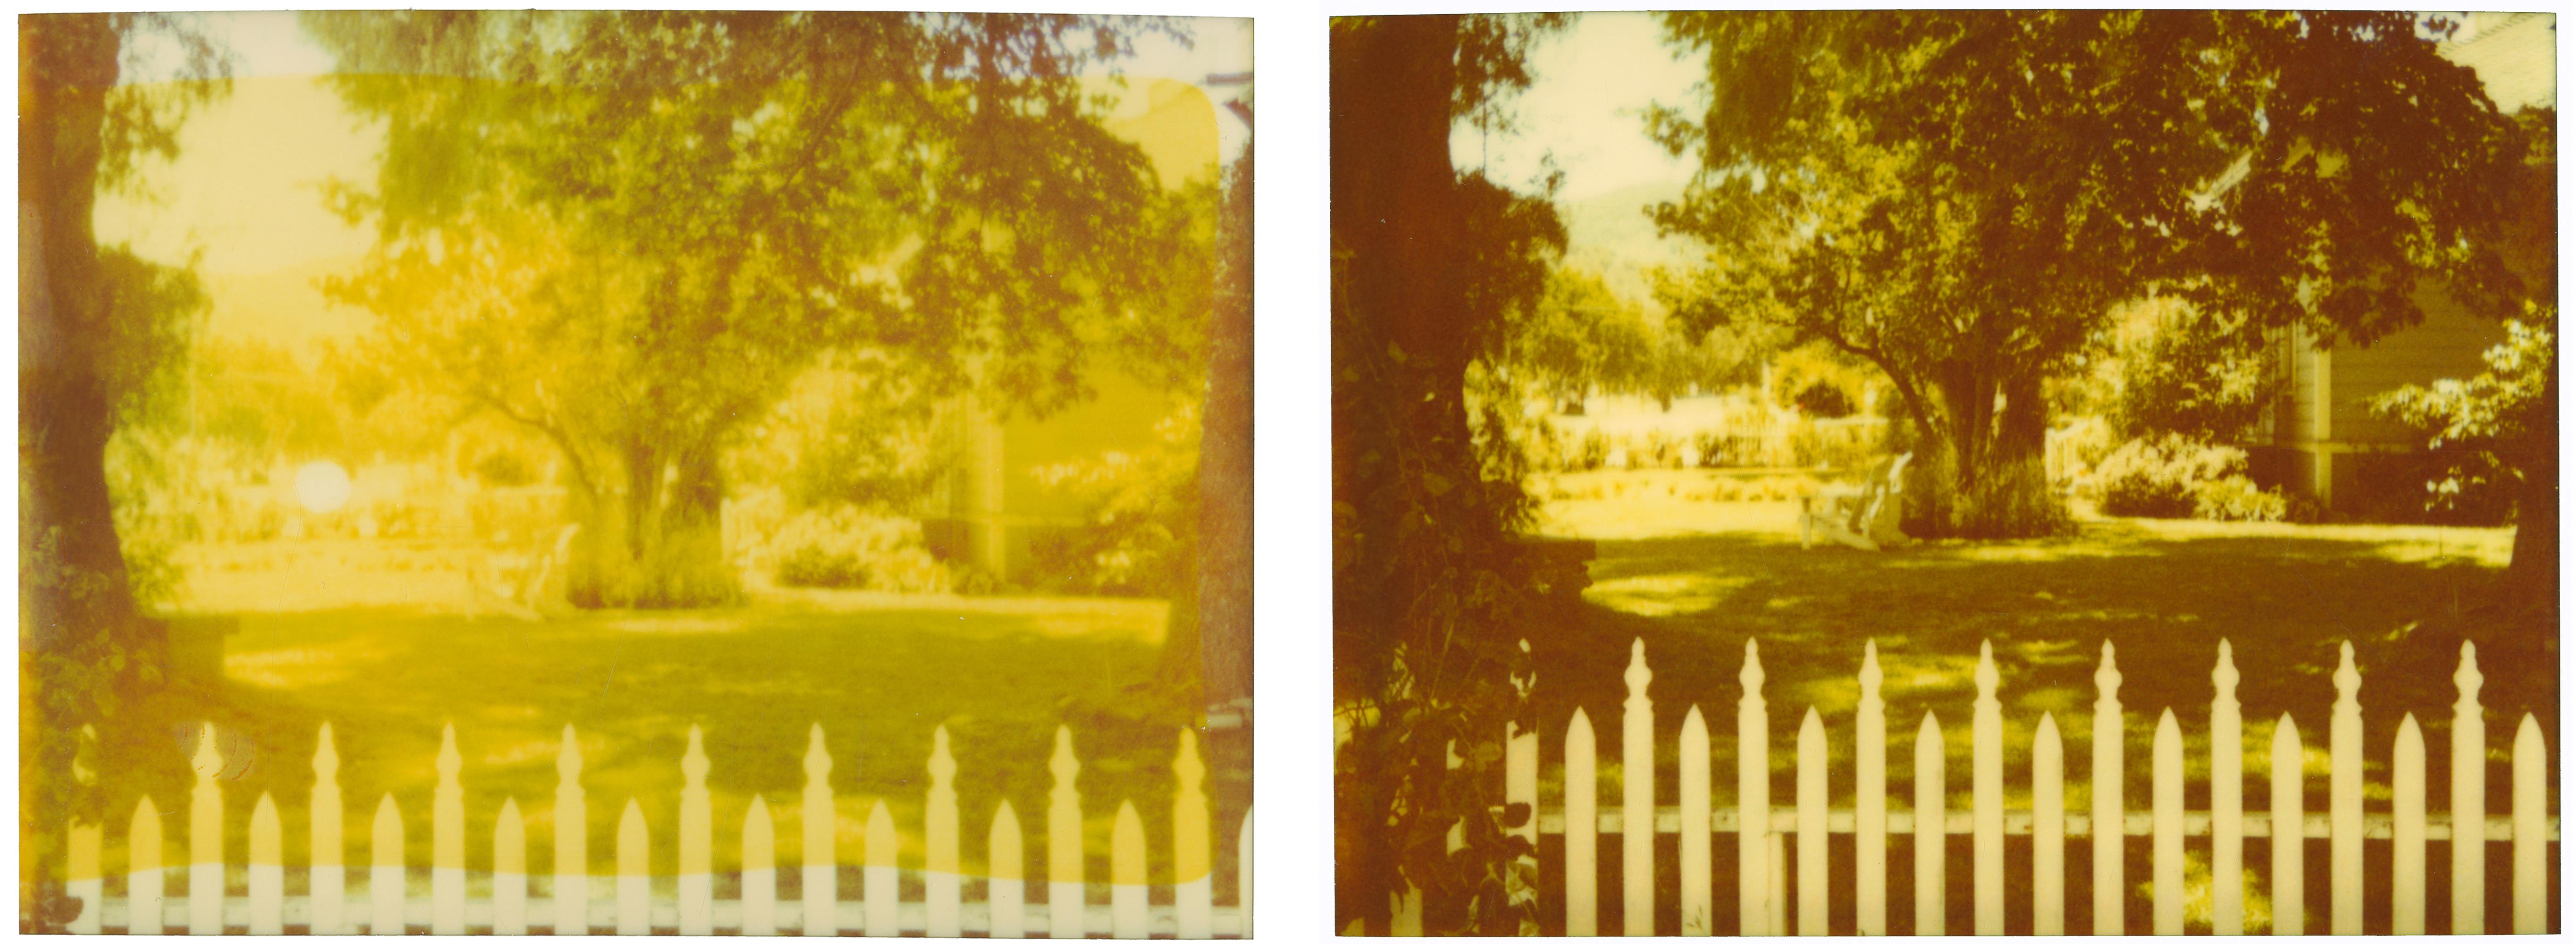 Stefanie Schneider Landscape Photograph – White Picket Fence (Suburbia), diptych, analog, mounted, Polaroid, Photograph